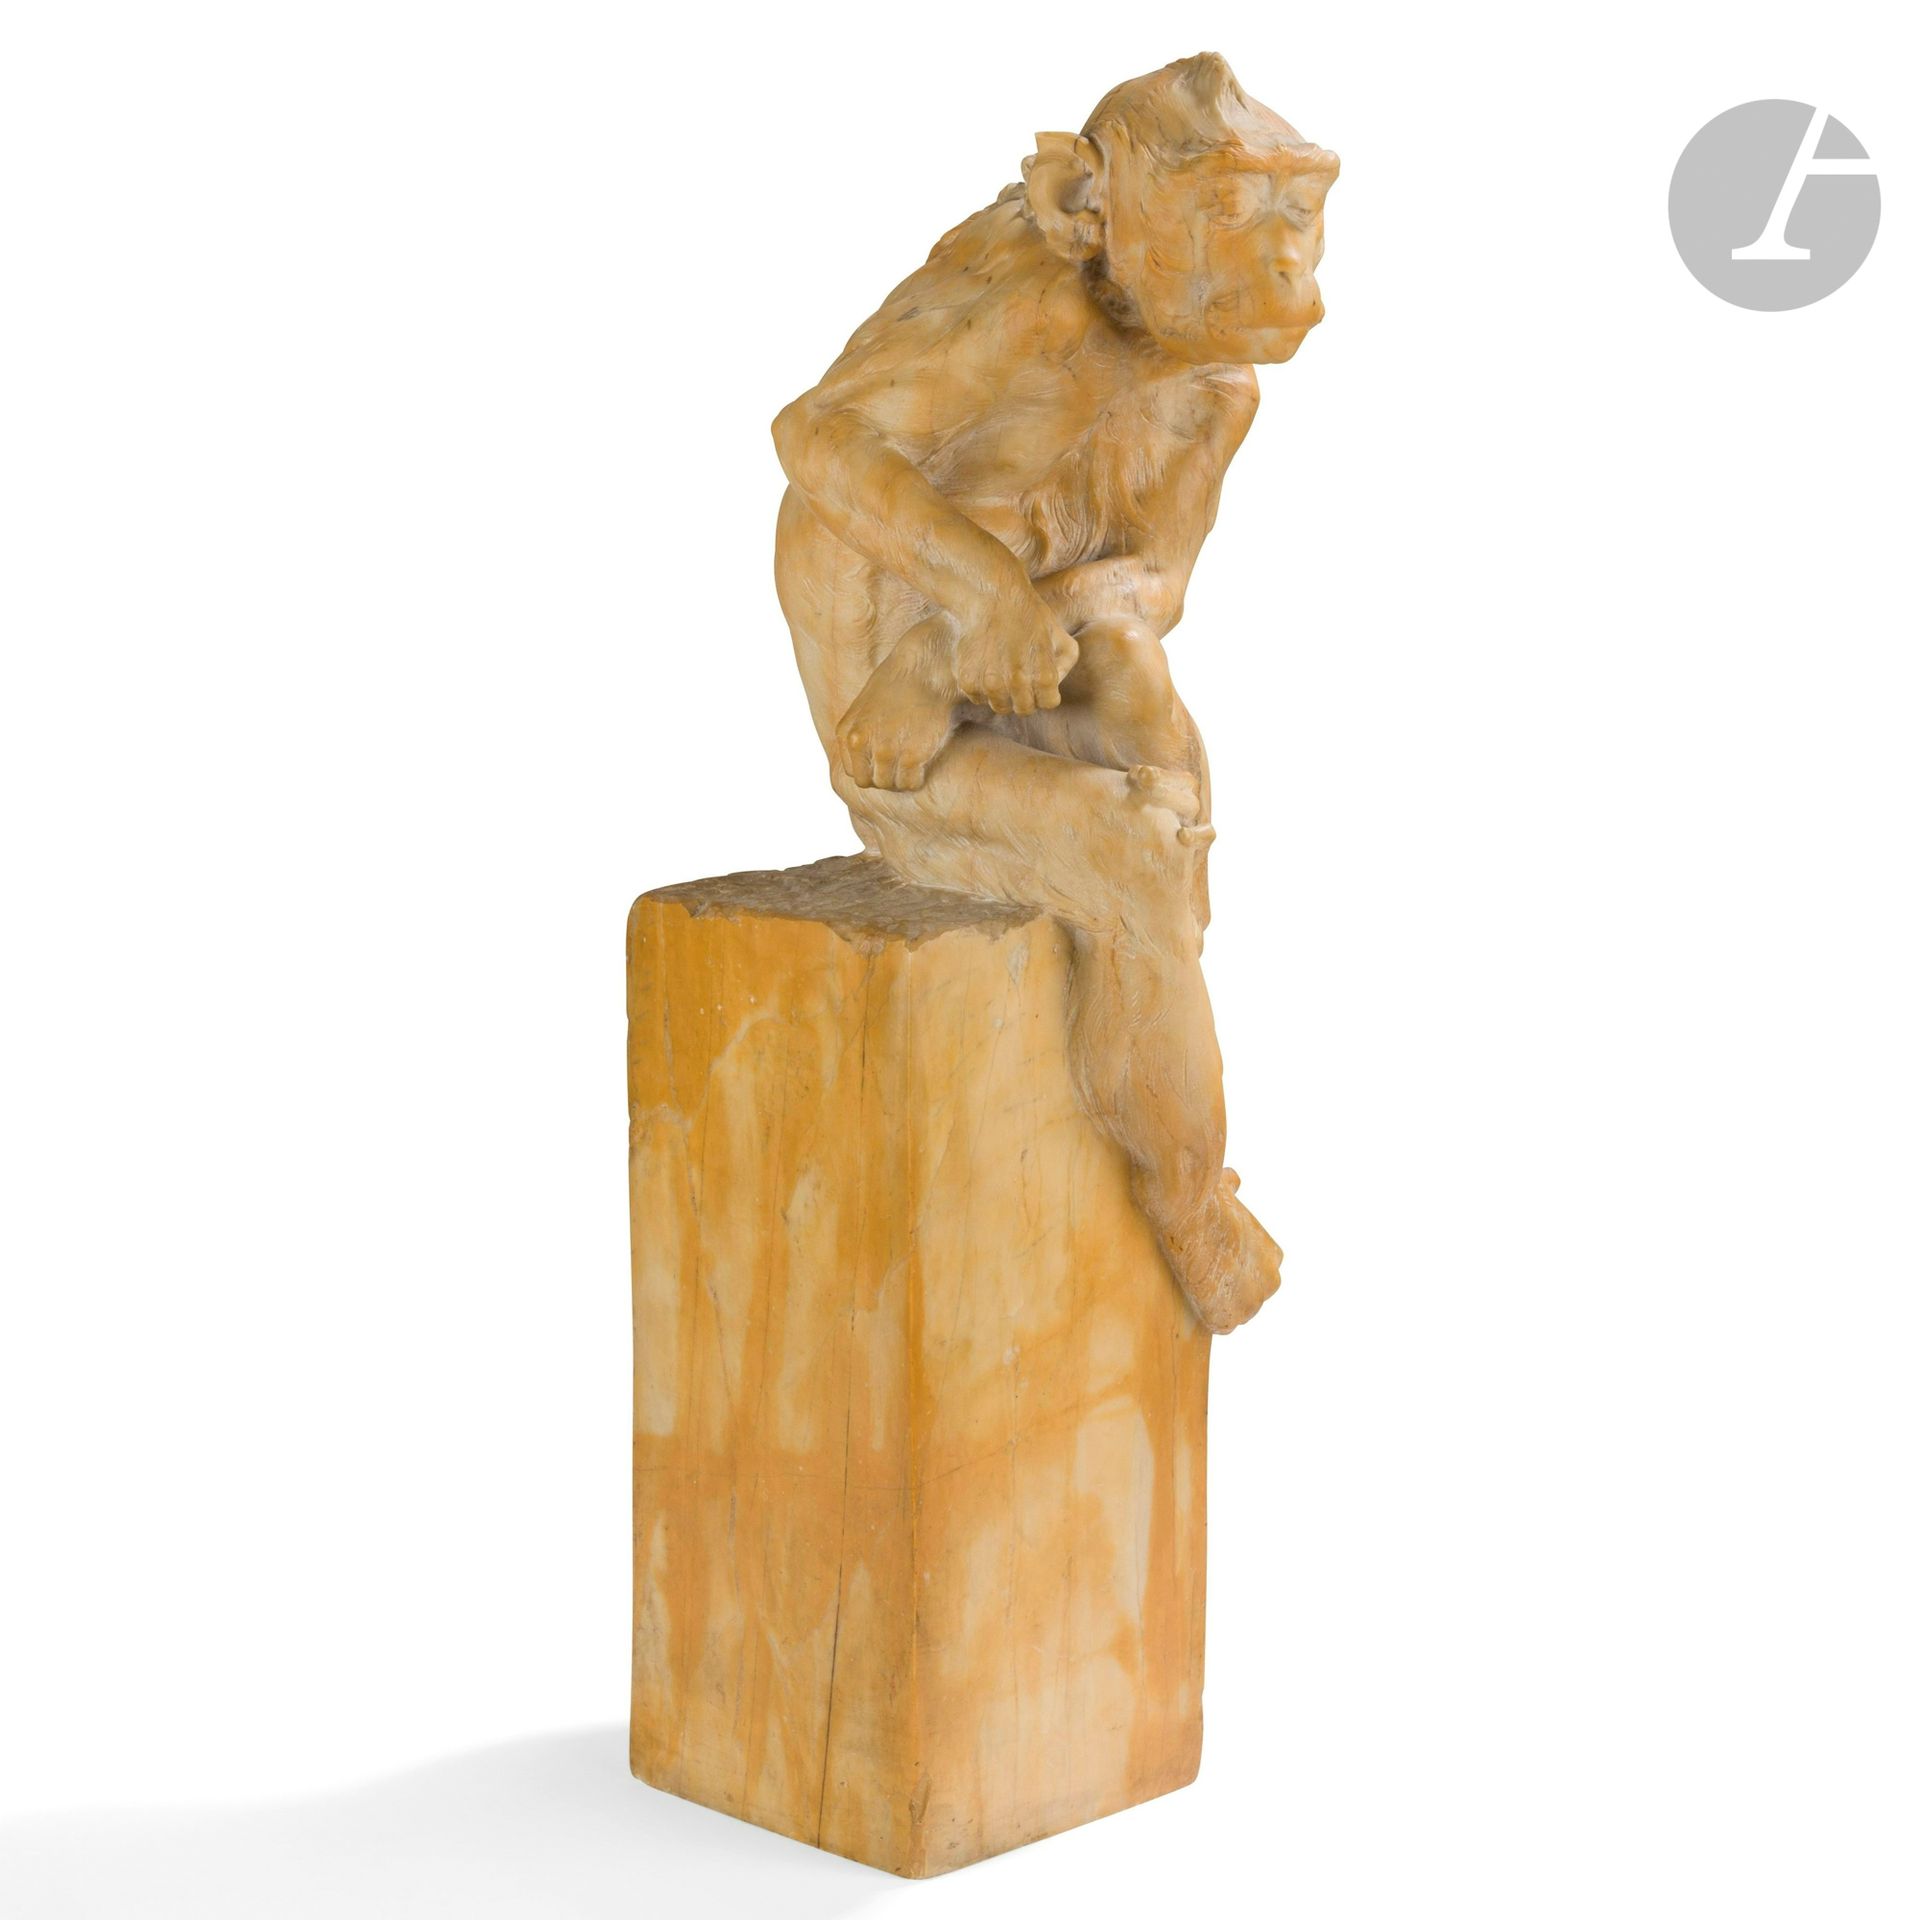 Null MAURICE ROGER MARX (1872-1956)
Träumender Affe, 1910
Skulptur.
Abguss aus s&hellip;